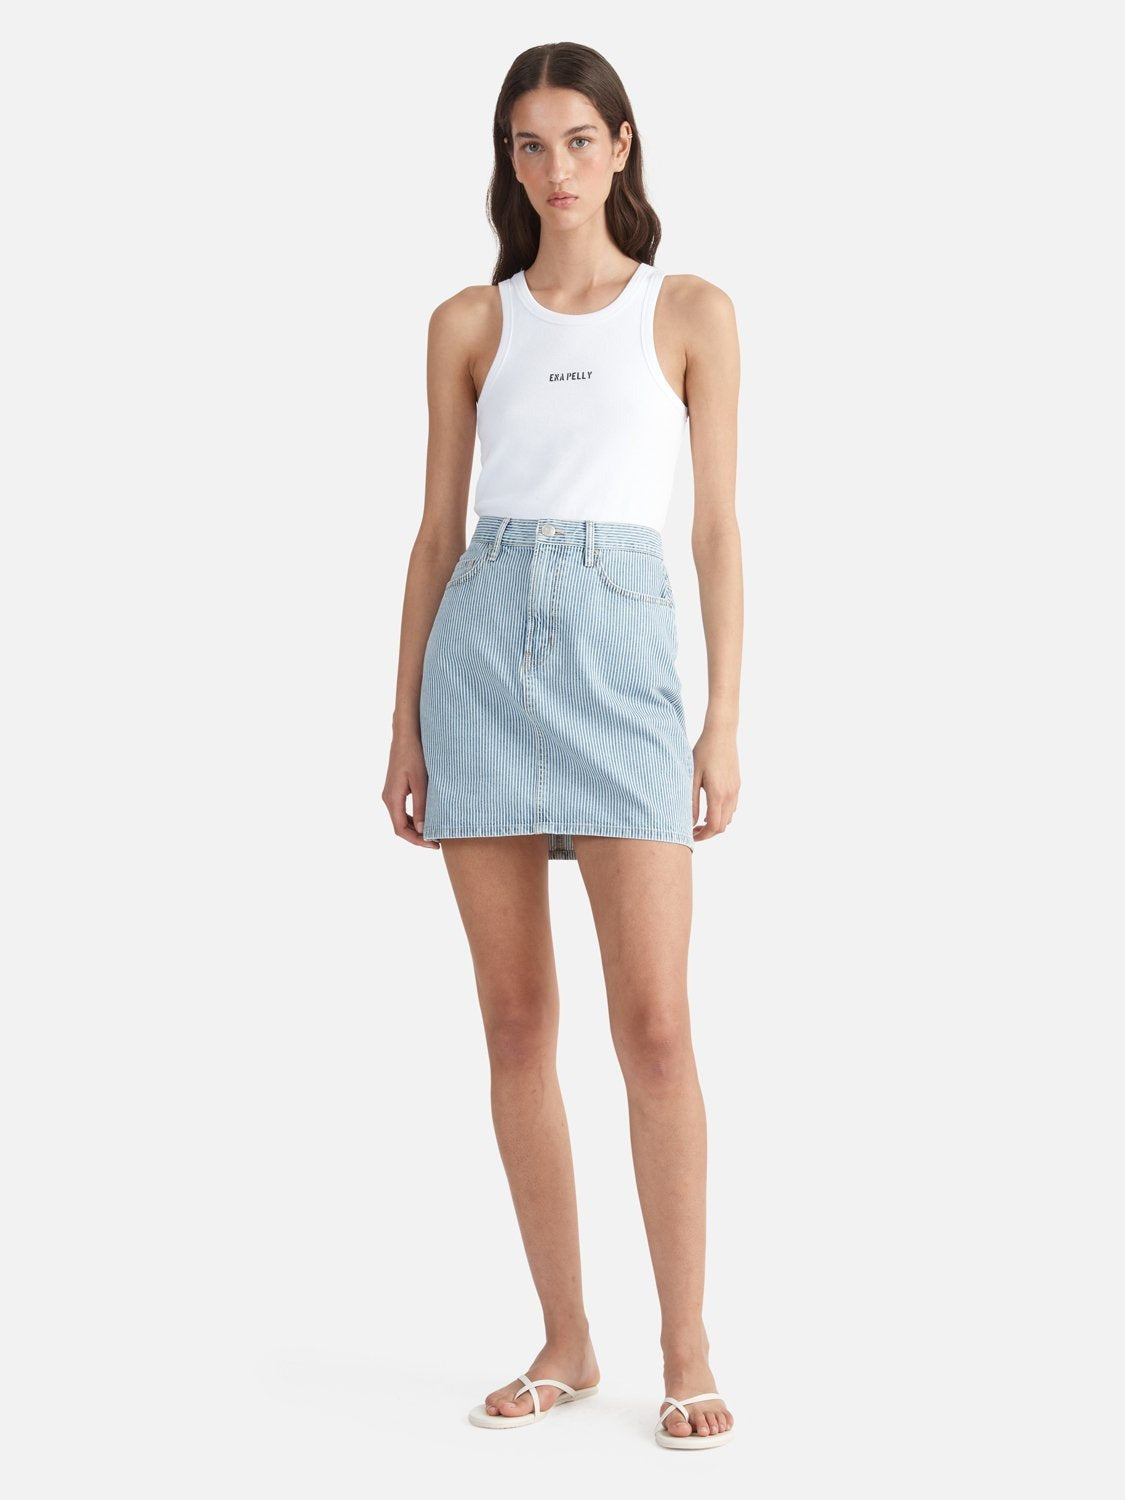 Ena Pelly | Diana Denim Mini Skirt - Ice Blue Stripe